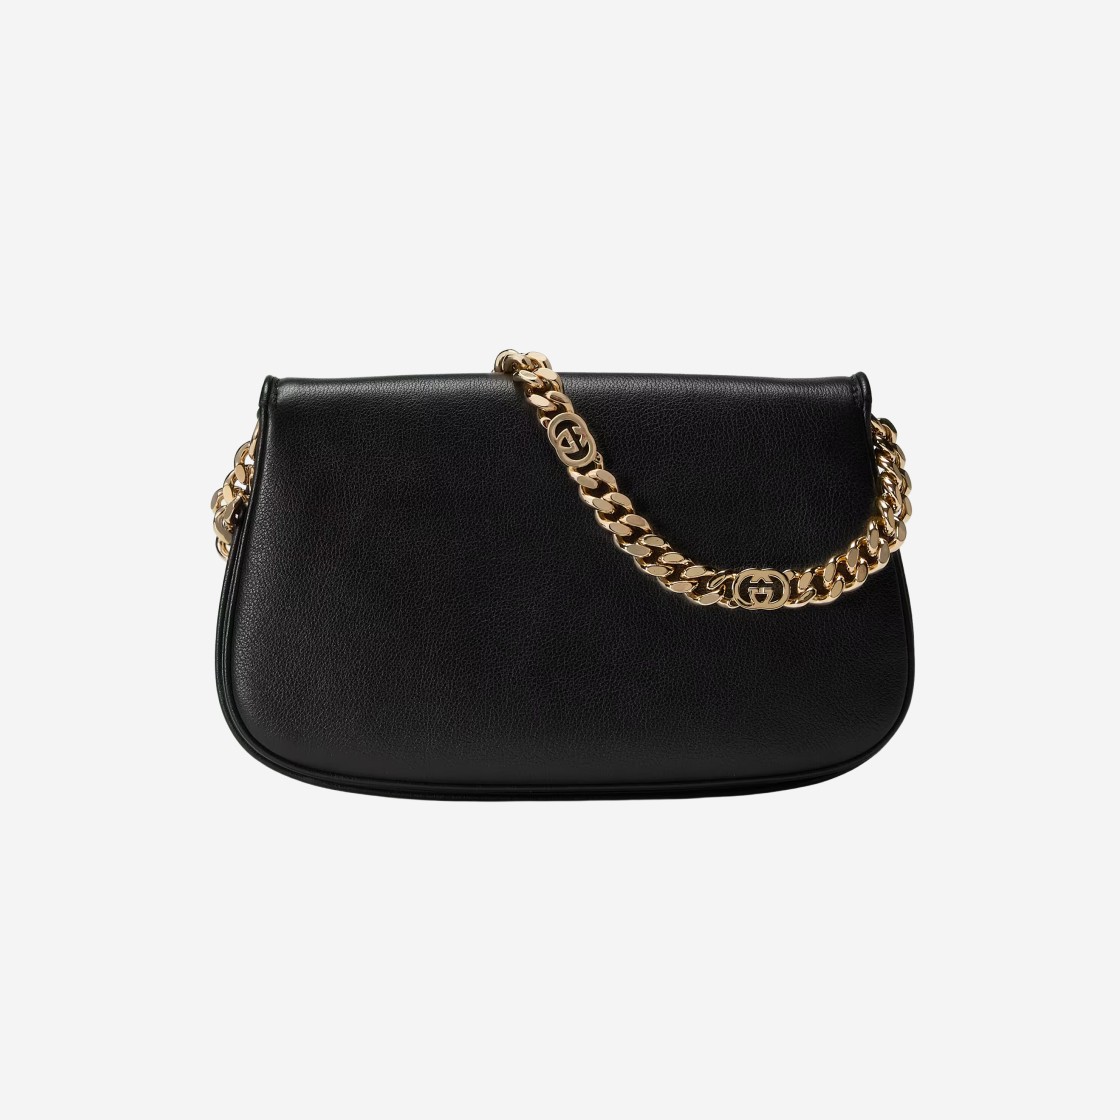 Black Blondie chain-strap leather cross-body bag